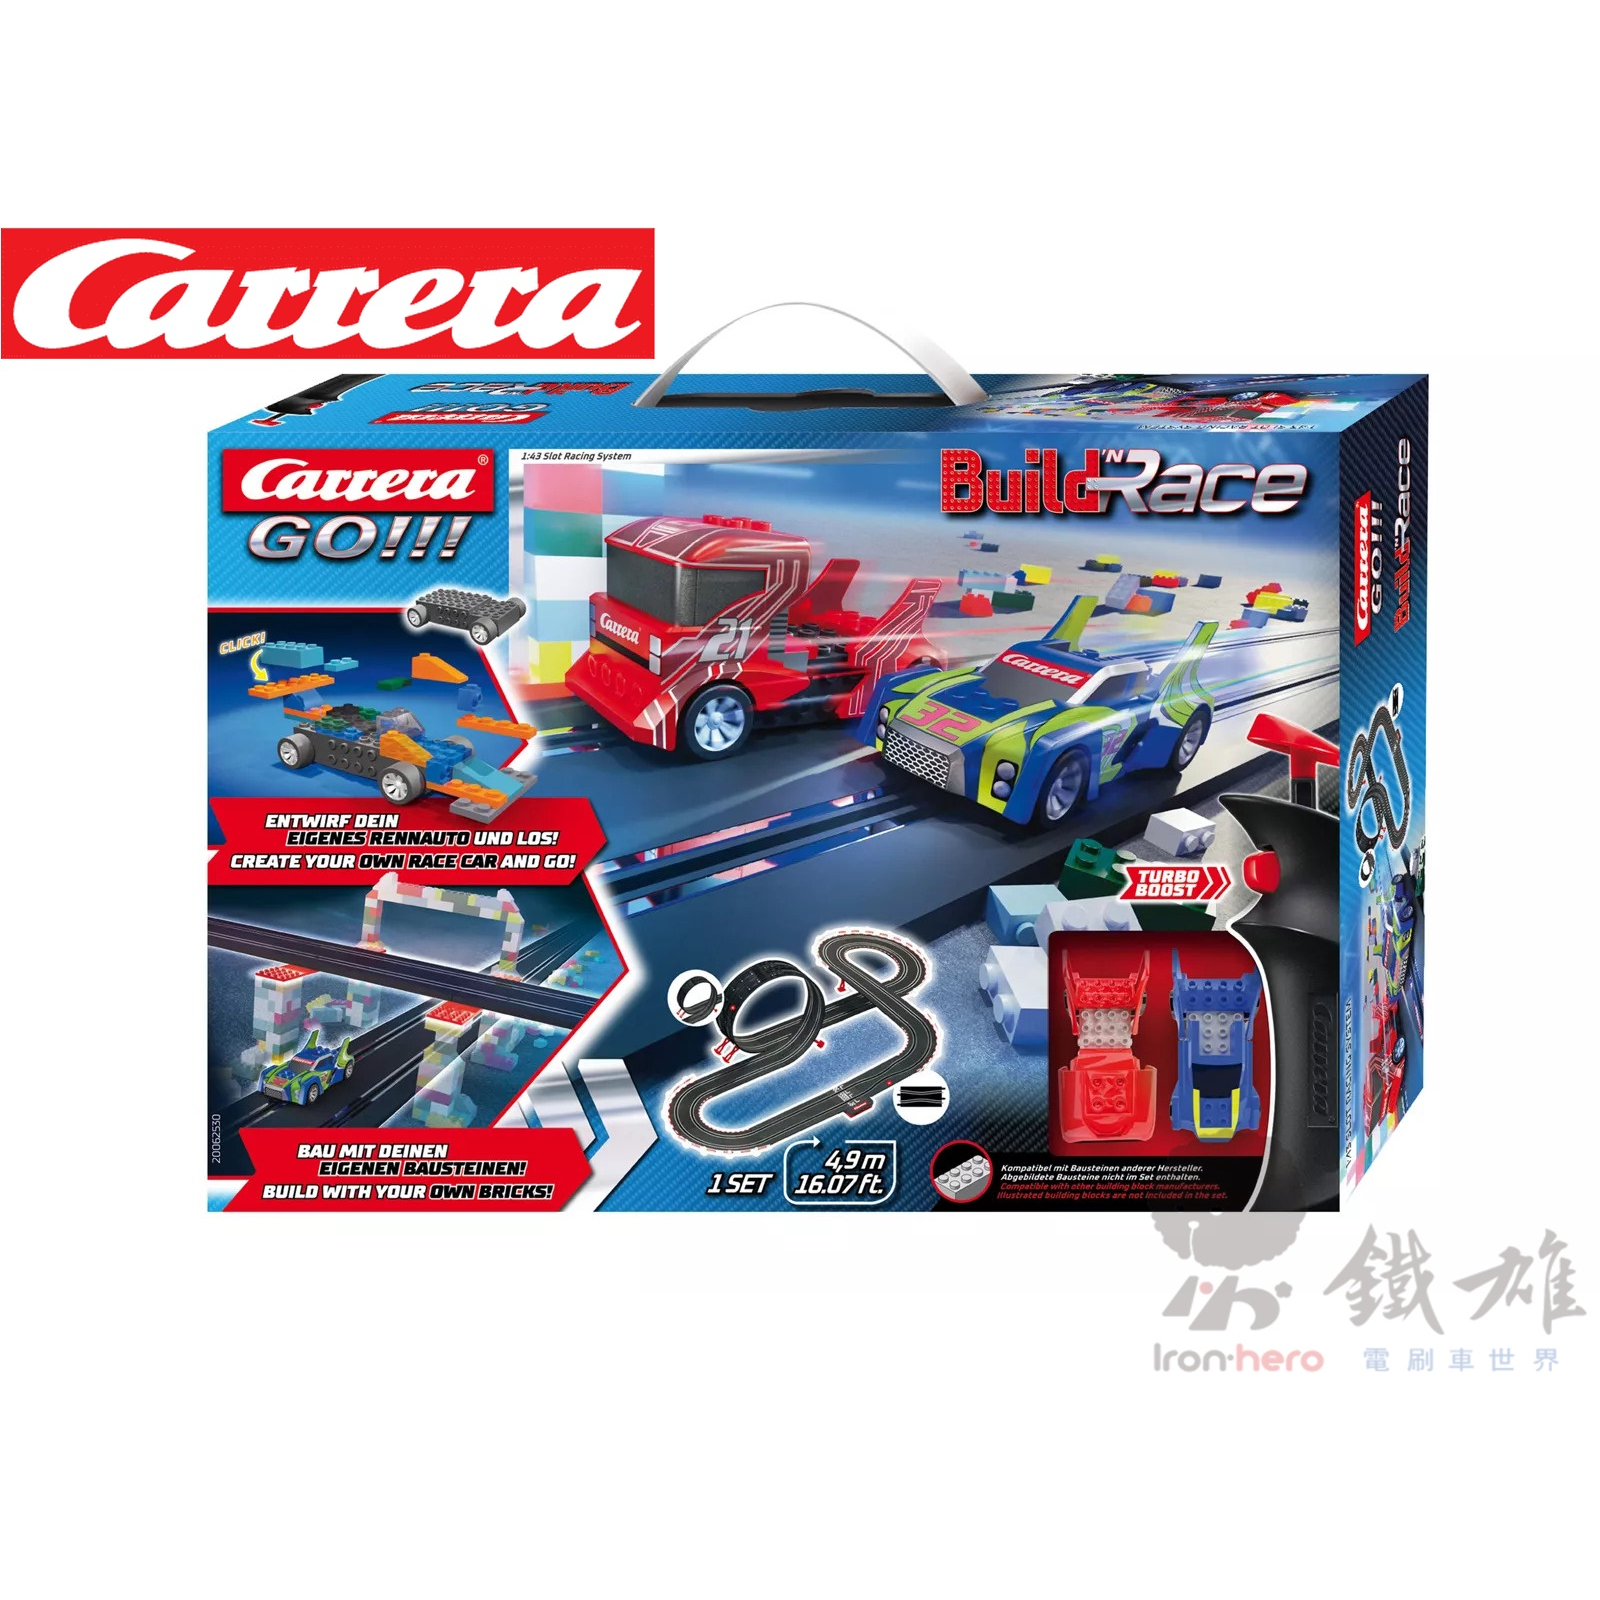 Carrera GO!!! 20062530 Build 'n Race - Racing Set 4.9 電刷車套裝組